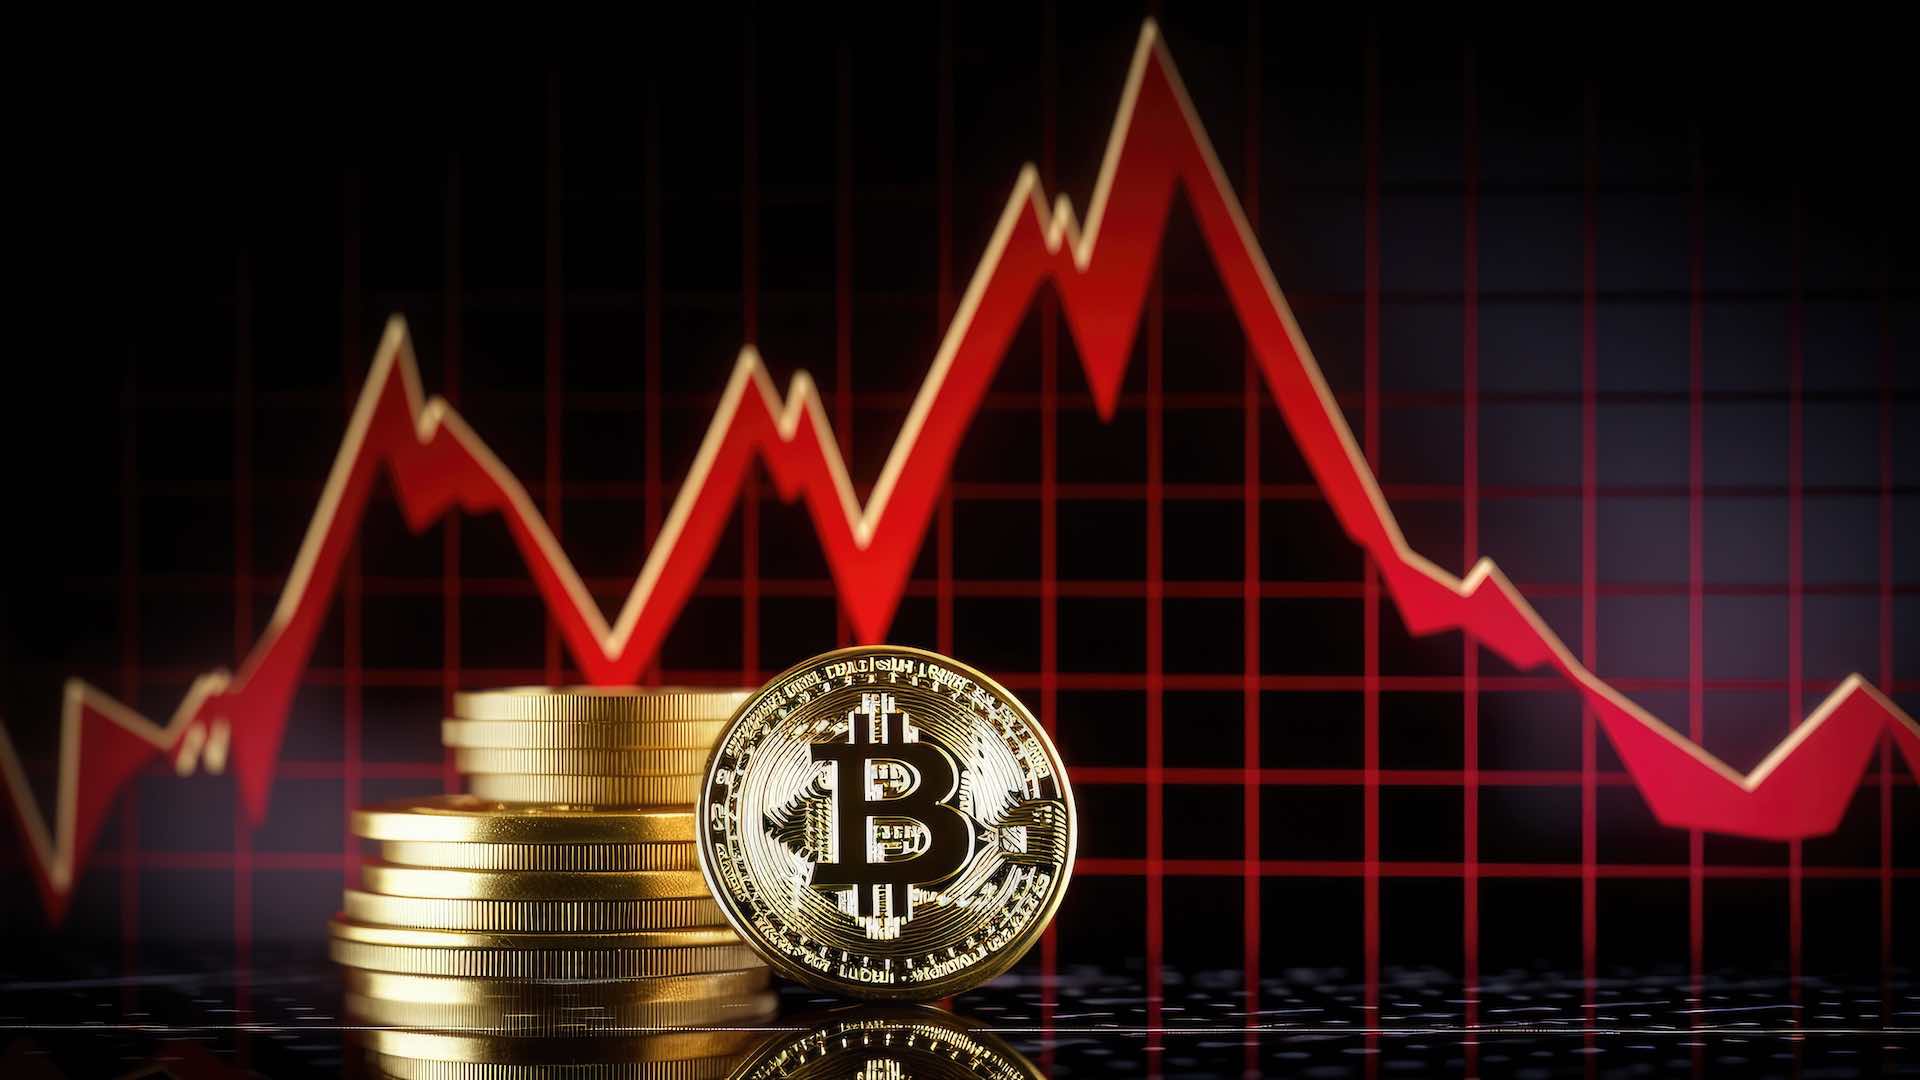 Bitcoin correction signals potential dip to ,000, say experts